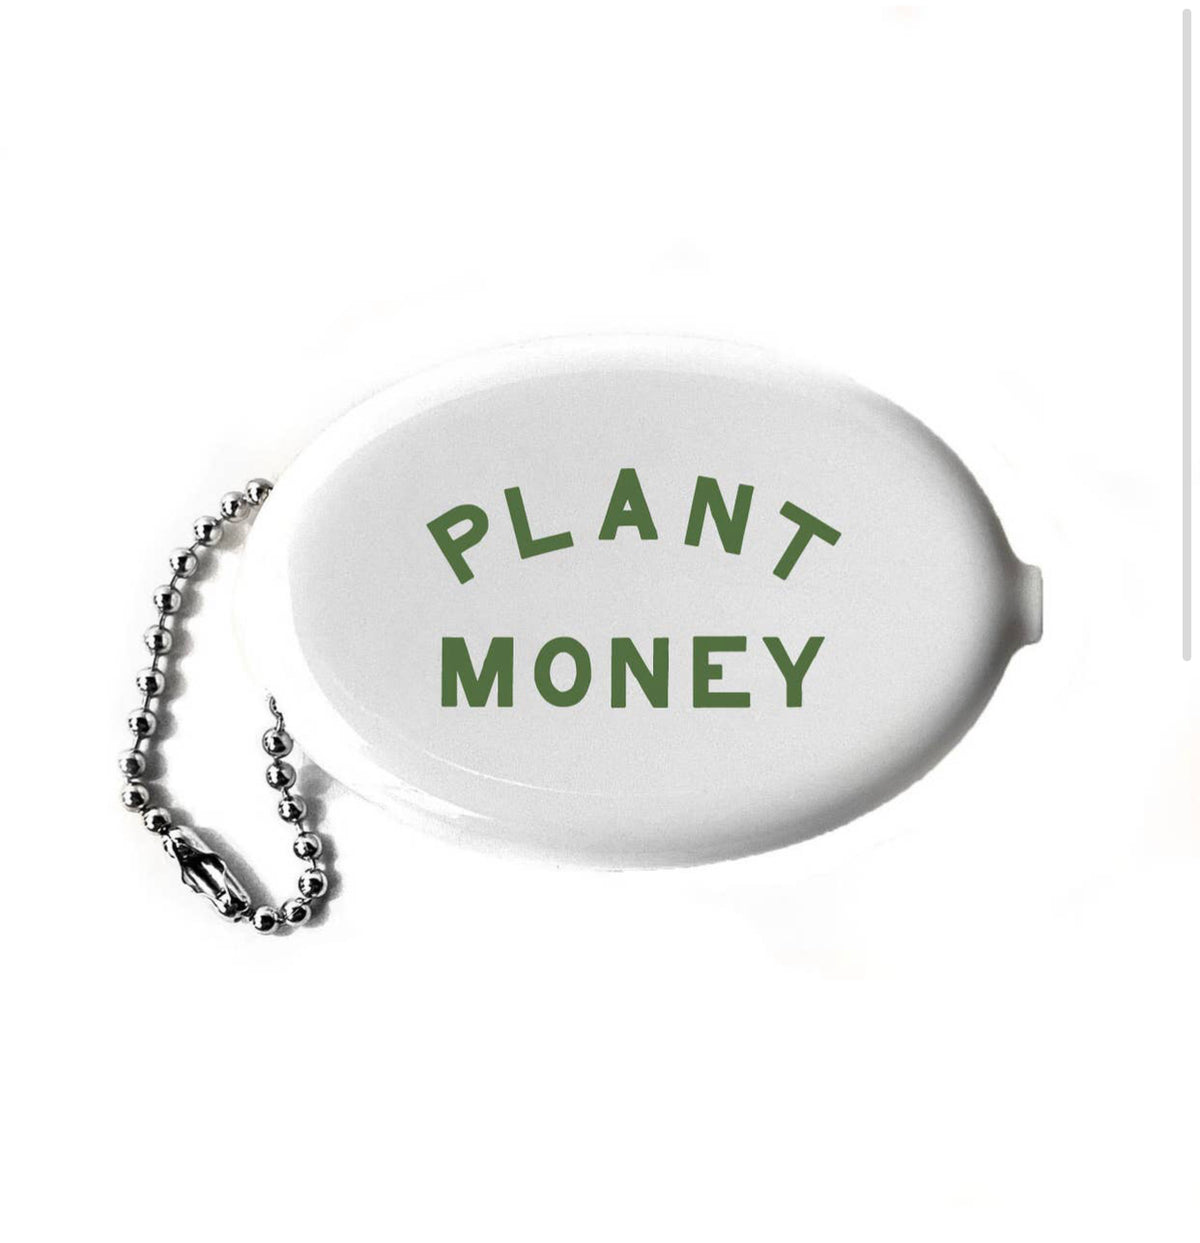 Plant money key chain coin purse